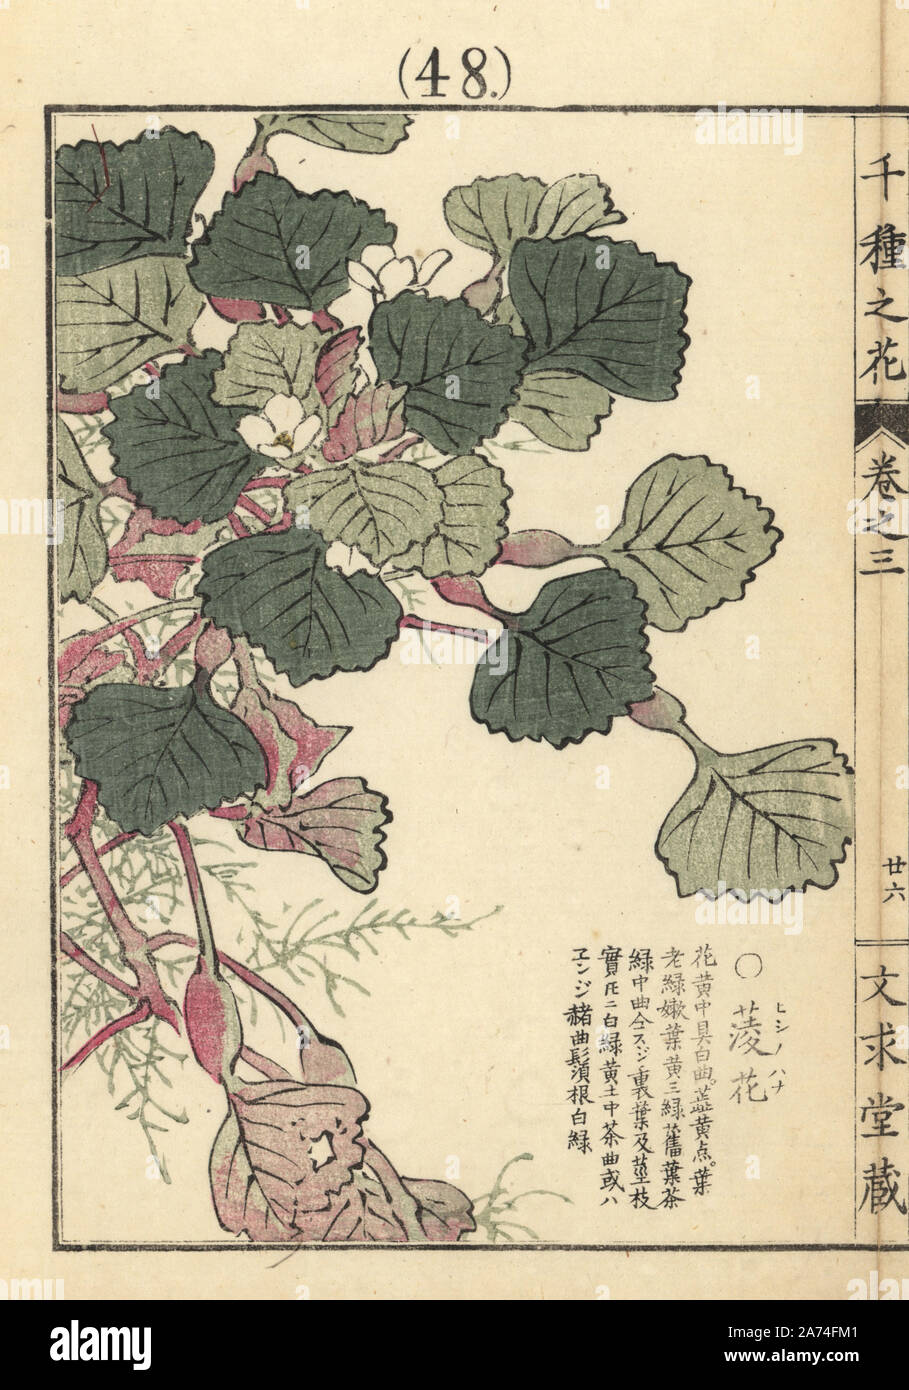 Hishinohana or Japanese water caltrop flower, Trapa japonica. Handcoloured woodblock print by Kono Bairei from Senshu no Hana (One Thousand Varieties of Flowers), Bunkyudo, Kyoto, 1889. Stock Photo